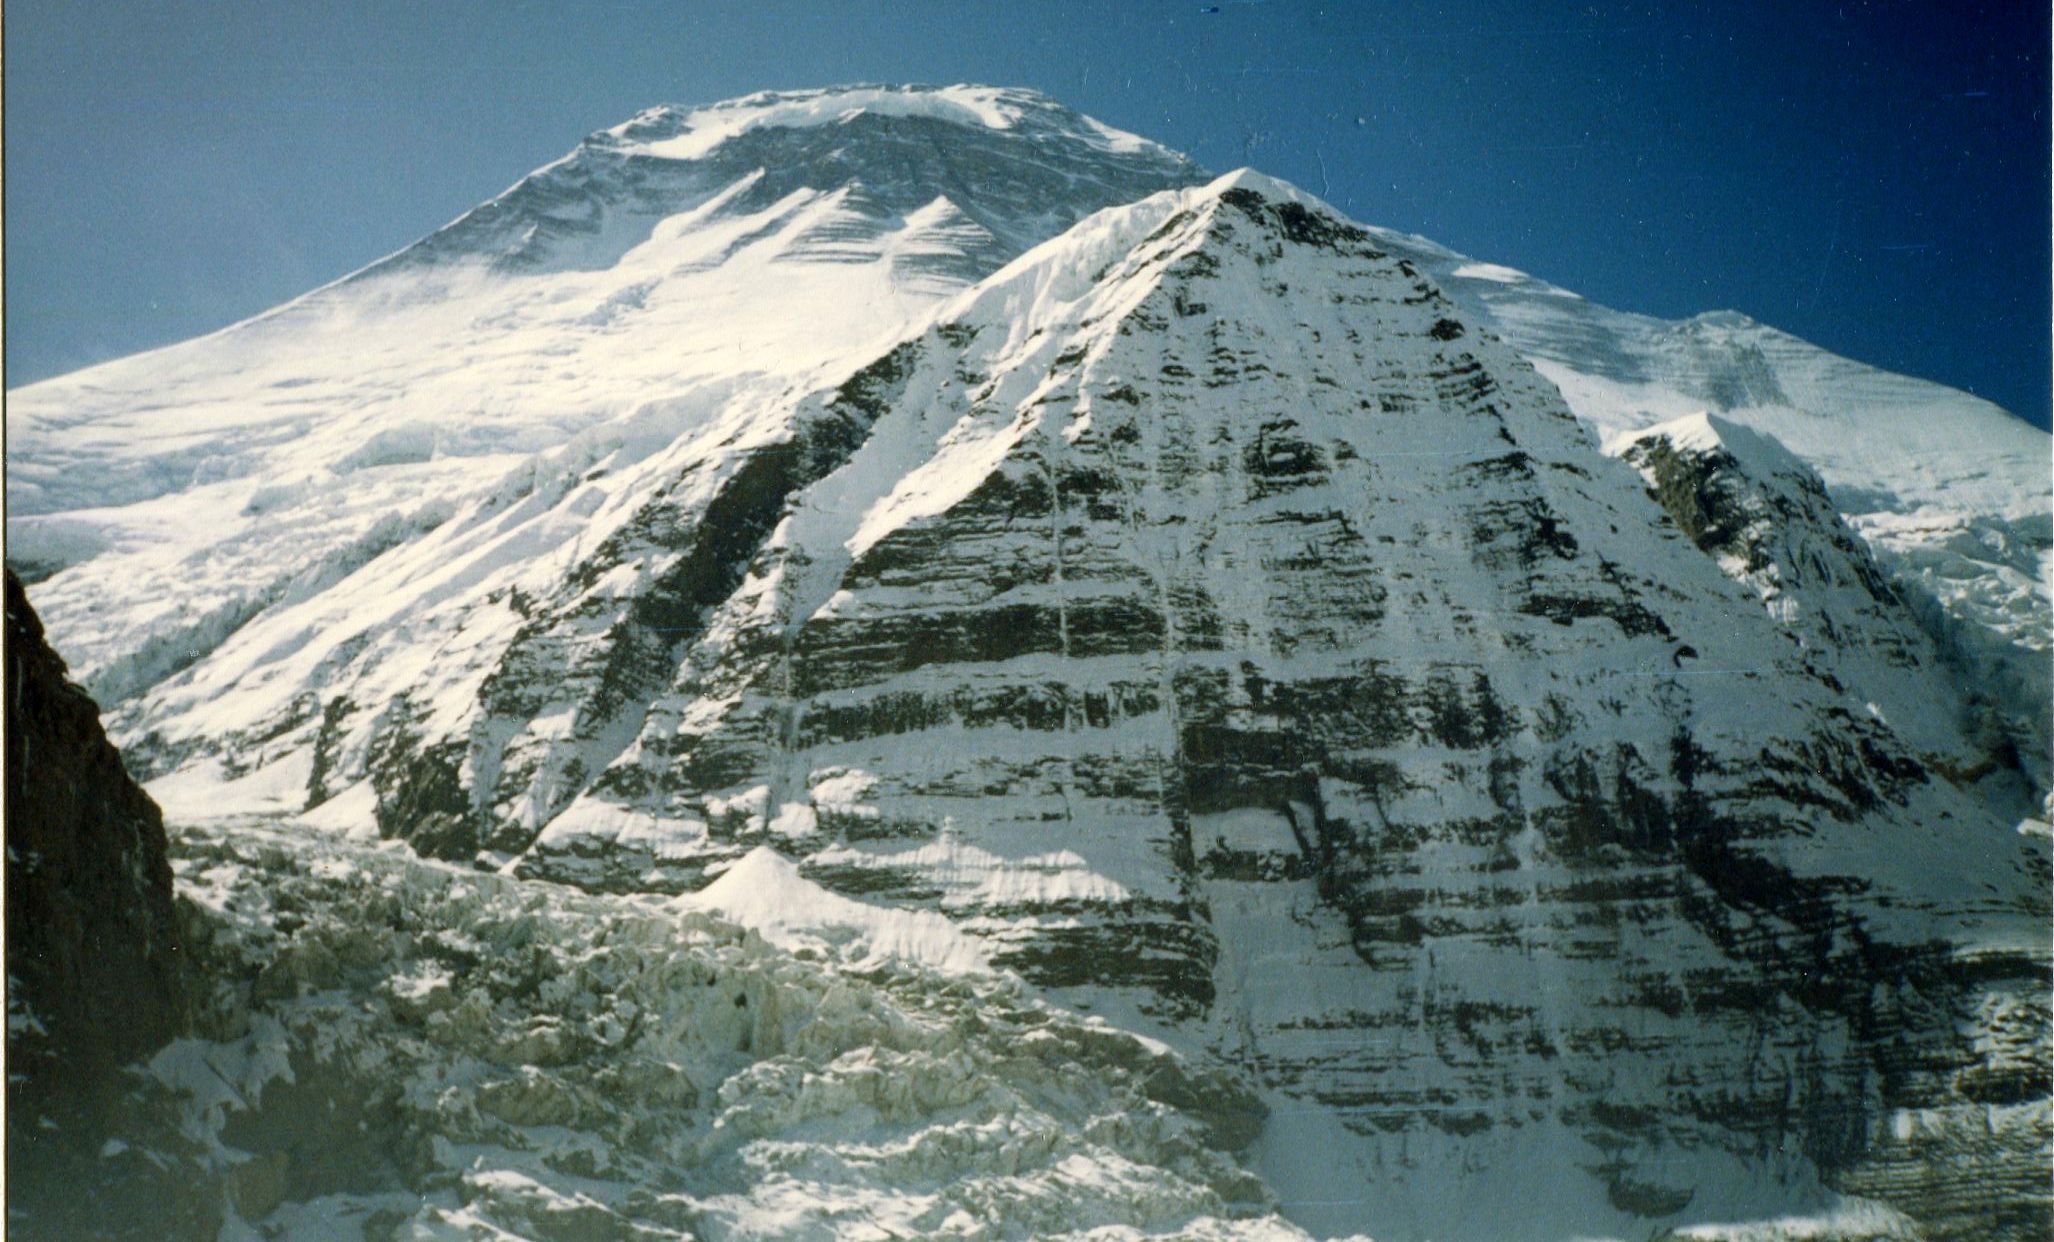 Little Eiger Face of Dhaulagiri I